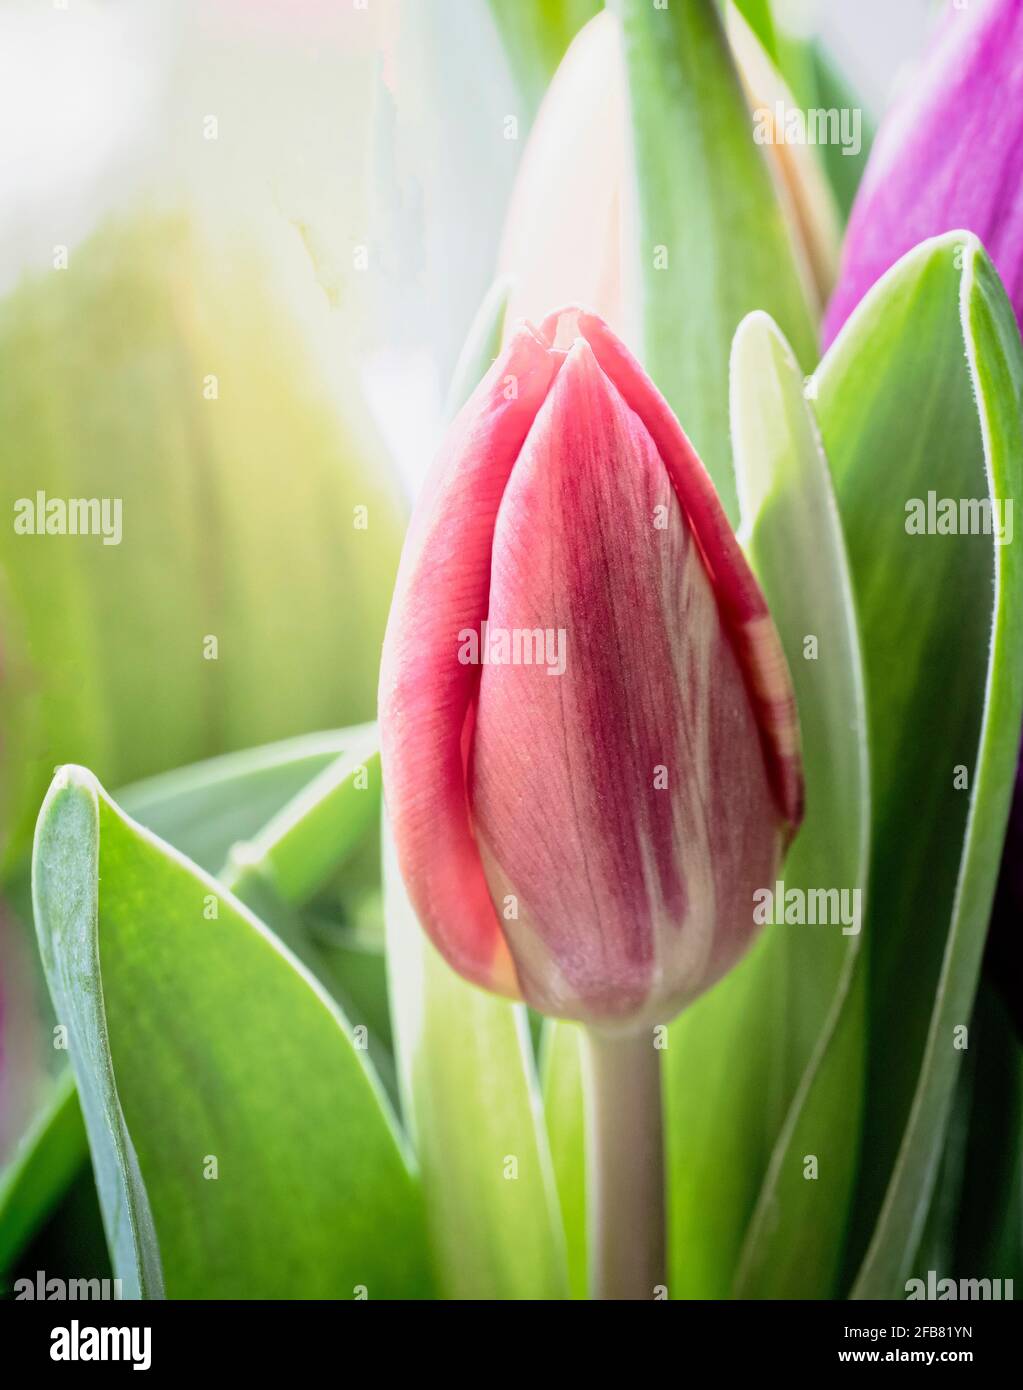 Tulip, Tulipa, Studio fotografió cerca de las flores en un jarrón. Foto de stock